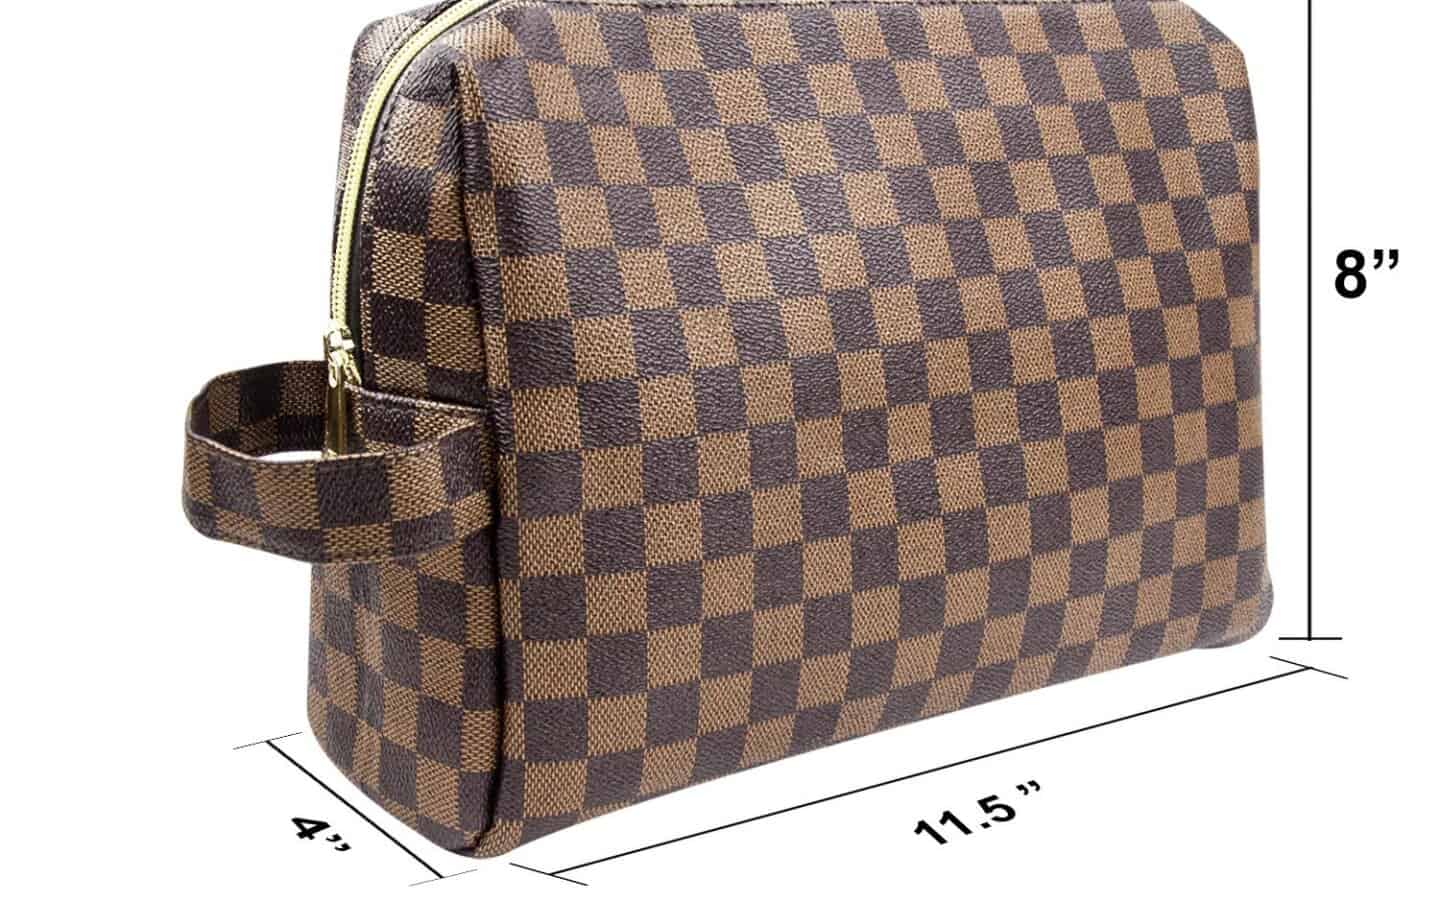 Louis Vuitton Look Alike Bags Walmart.com | semashow.com